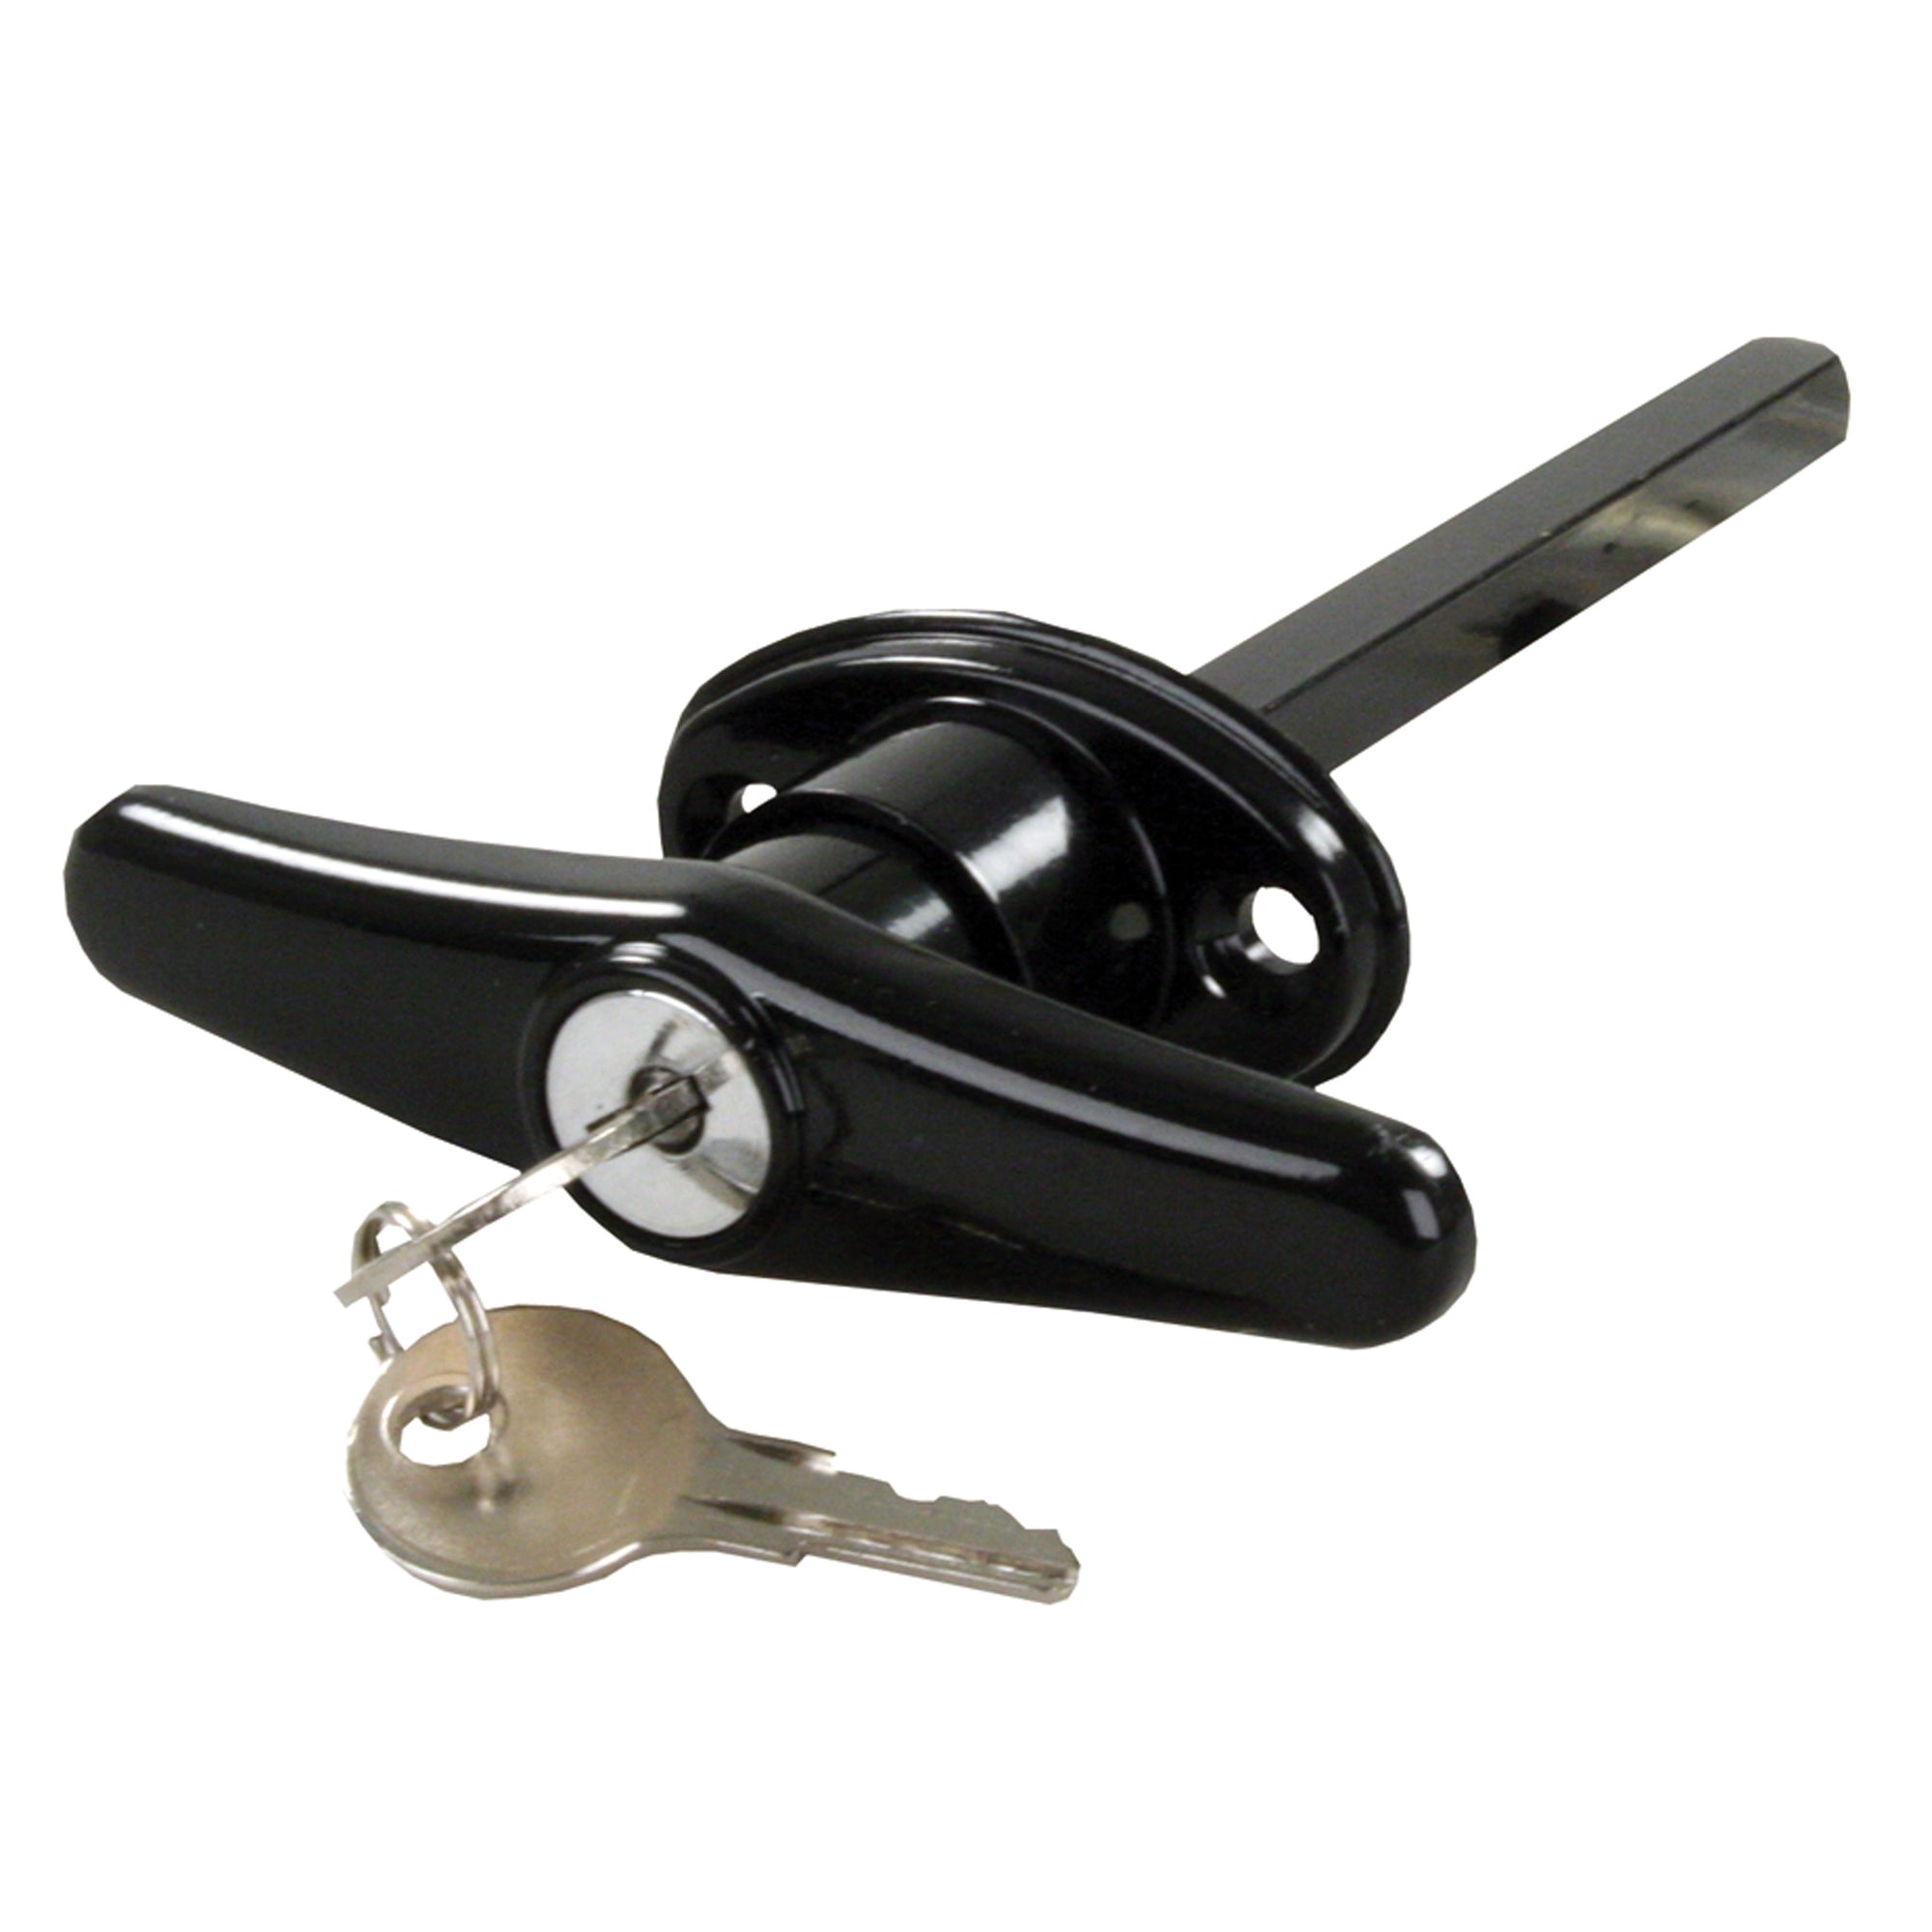 JR Products 10985 Locking T-Handle - Black